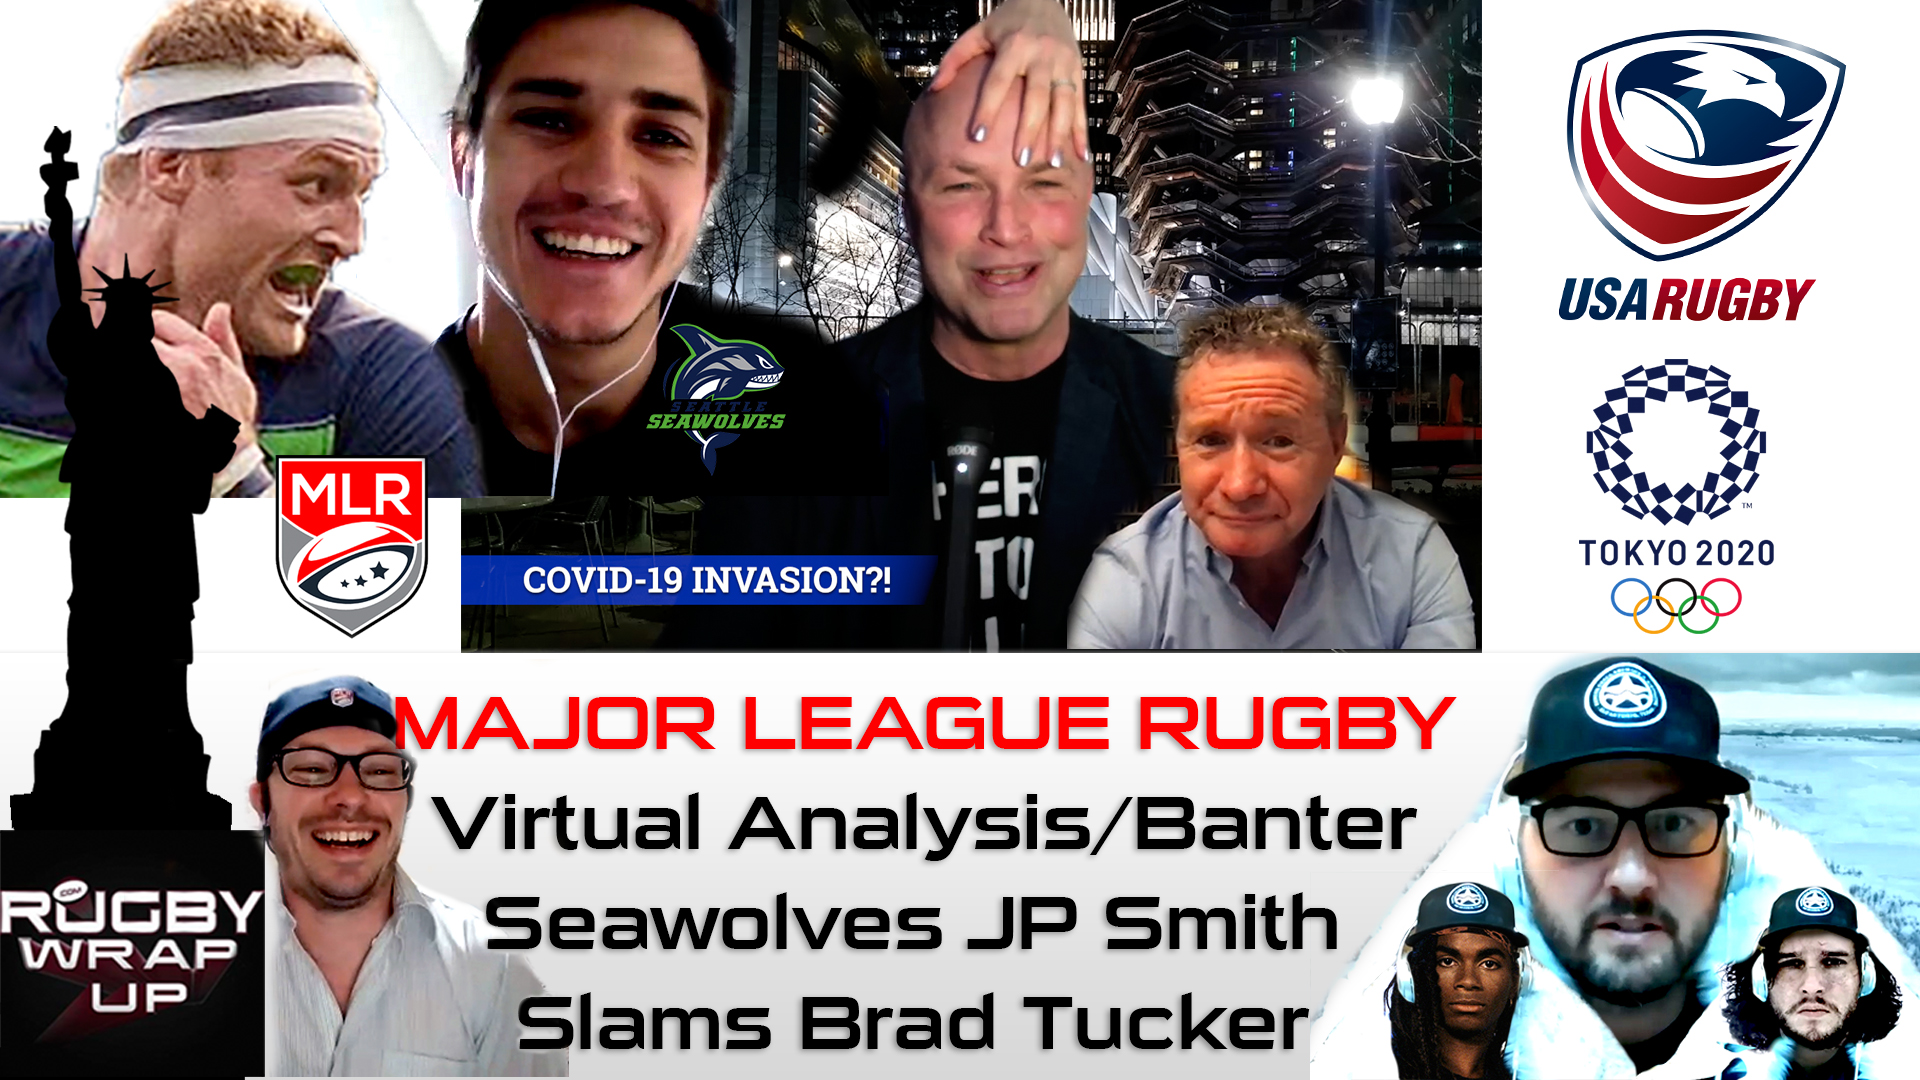 Rugby Wrap Up, Major League Rugby, JP Smith, Dan Power, Bryan Matt_McCarthy, Olympics, USA_Rugby, Brad Tucker MLR